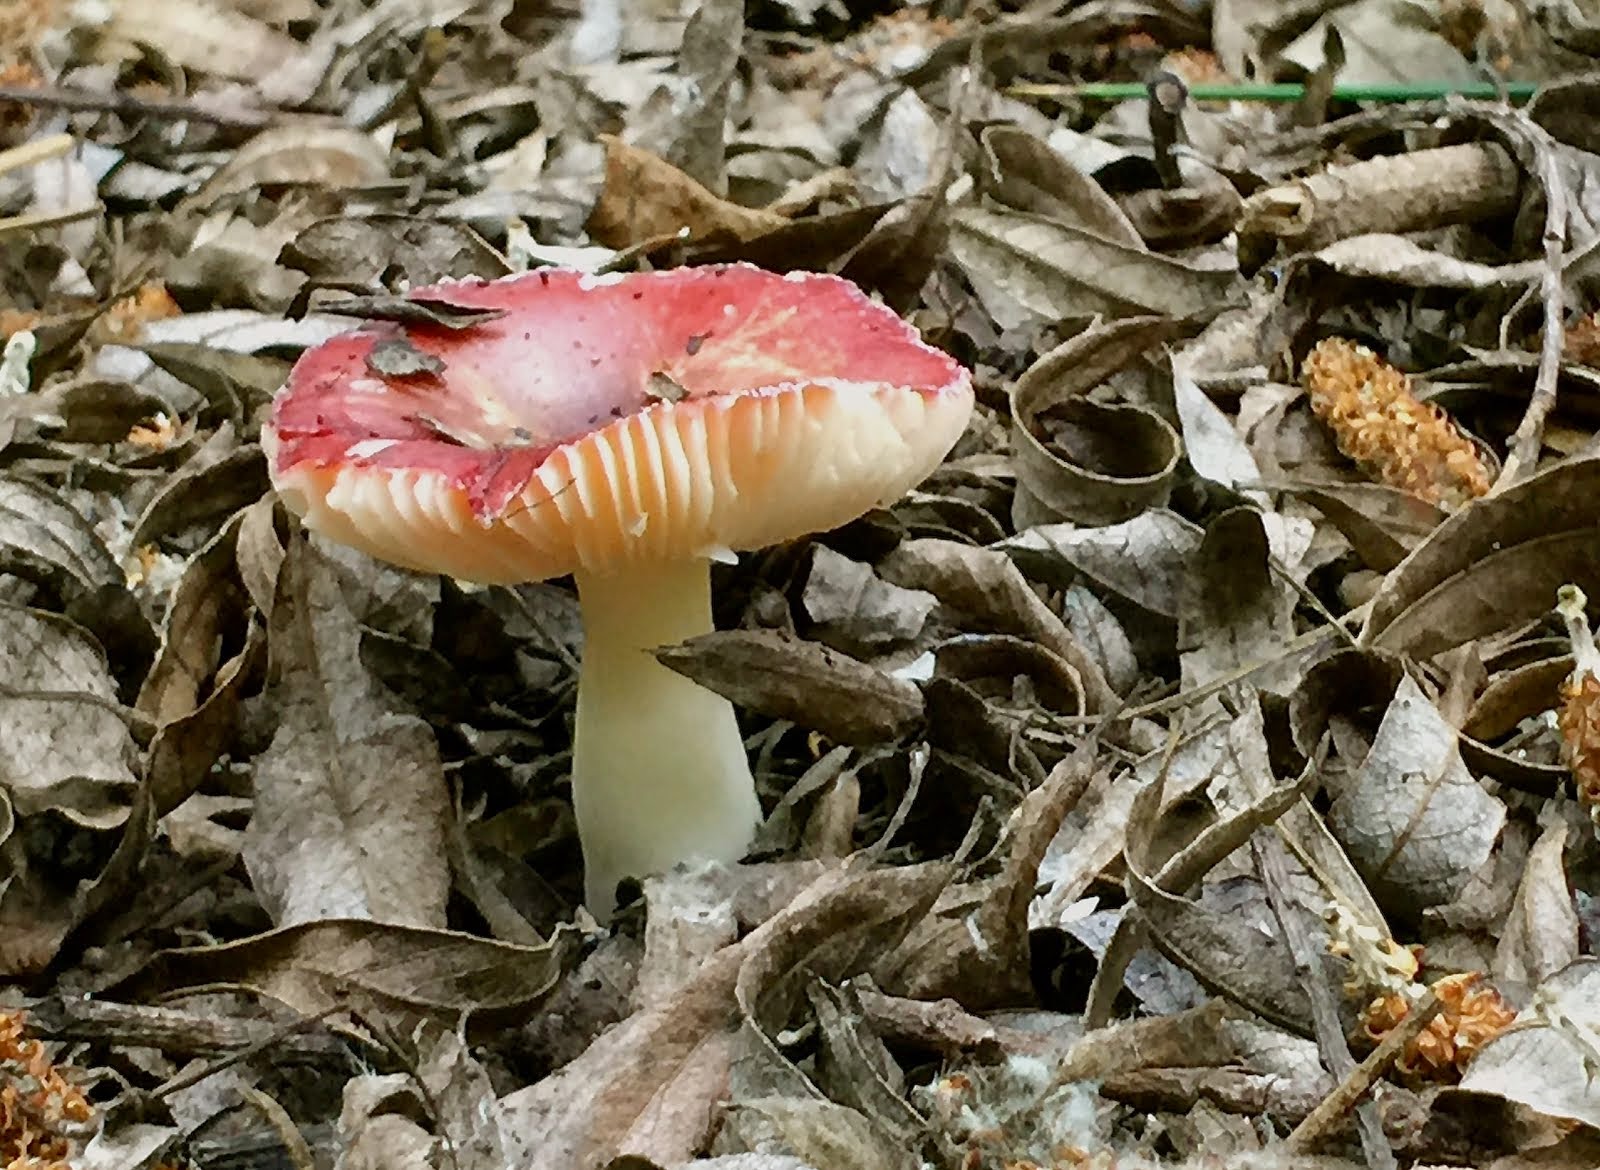 Local Fungus, 4/14/15